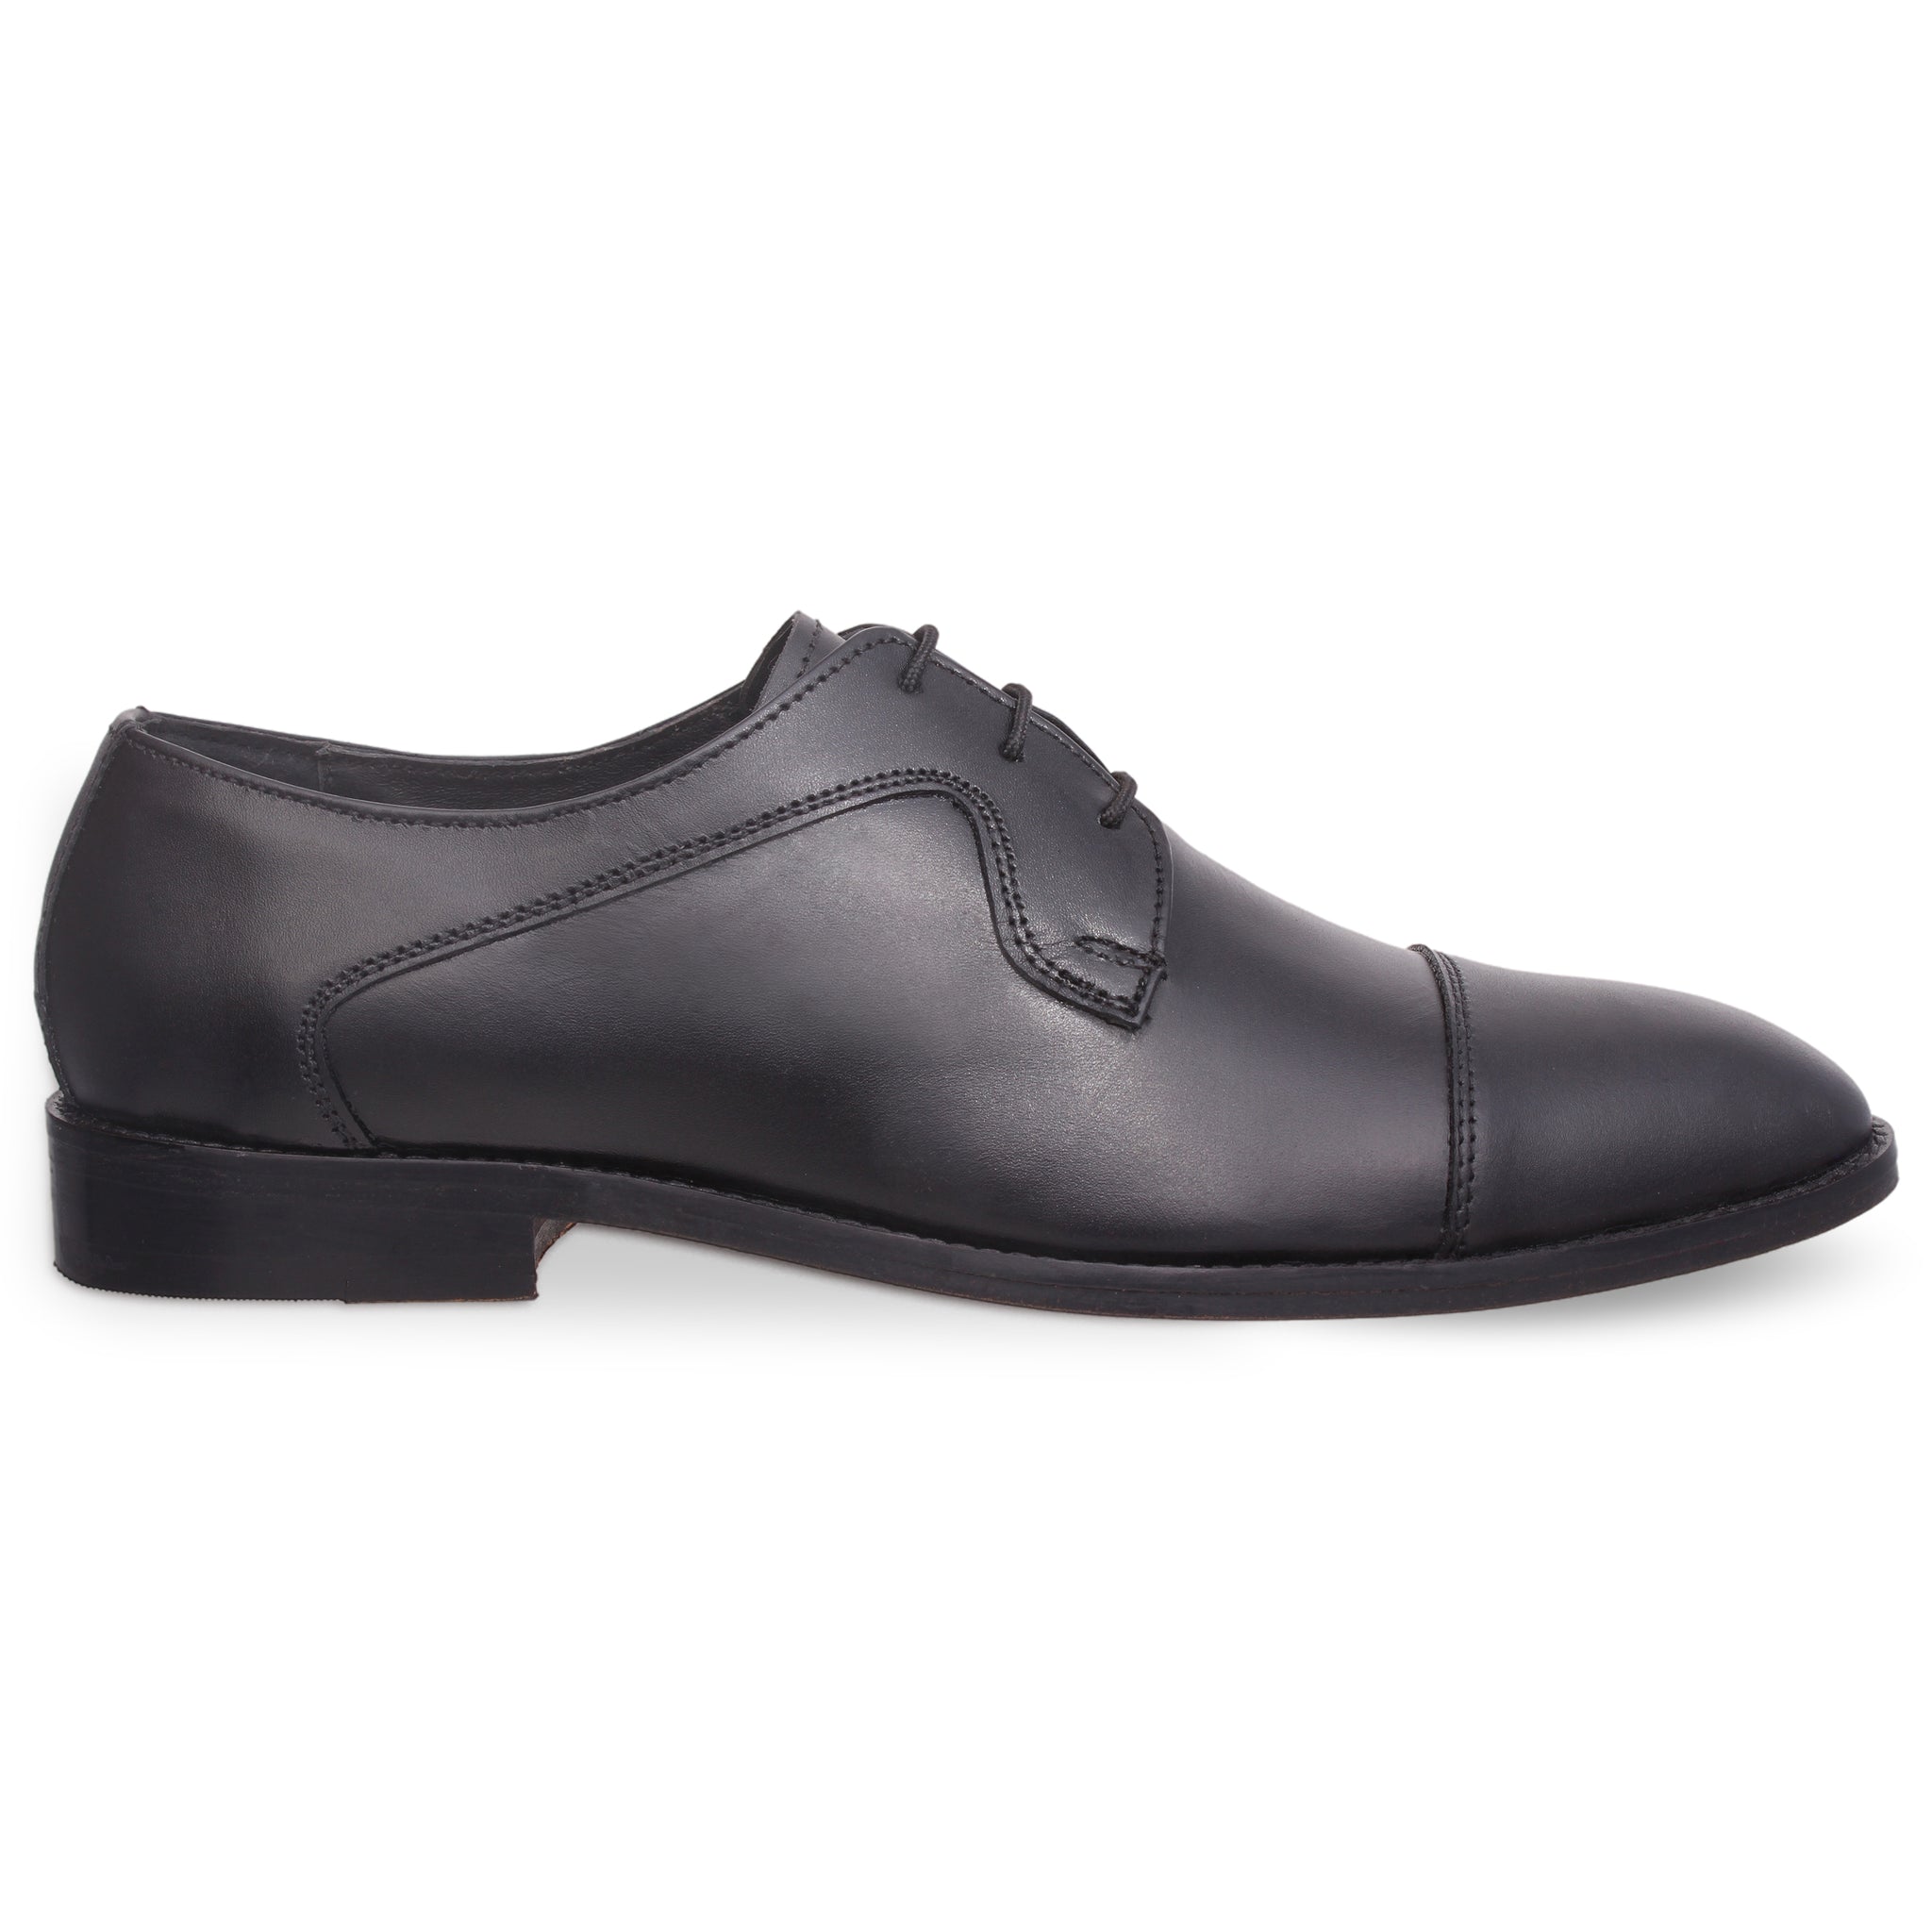 Men's formal Office Shoe with laces 3 holes Black Designed by Cotton C ...